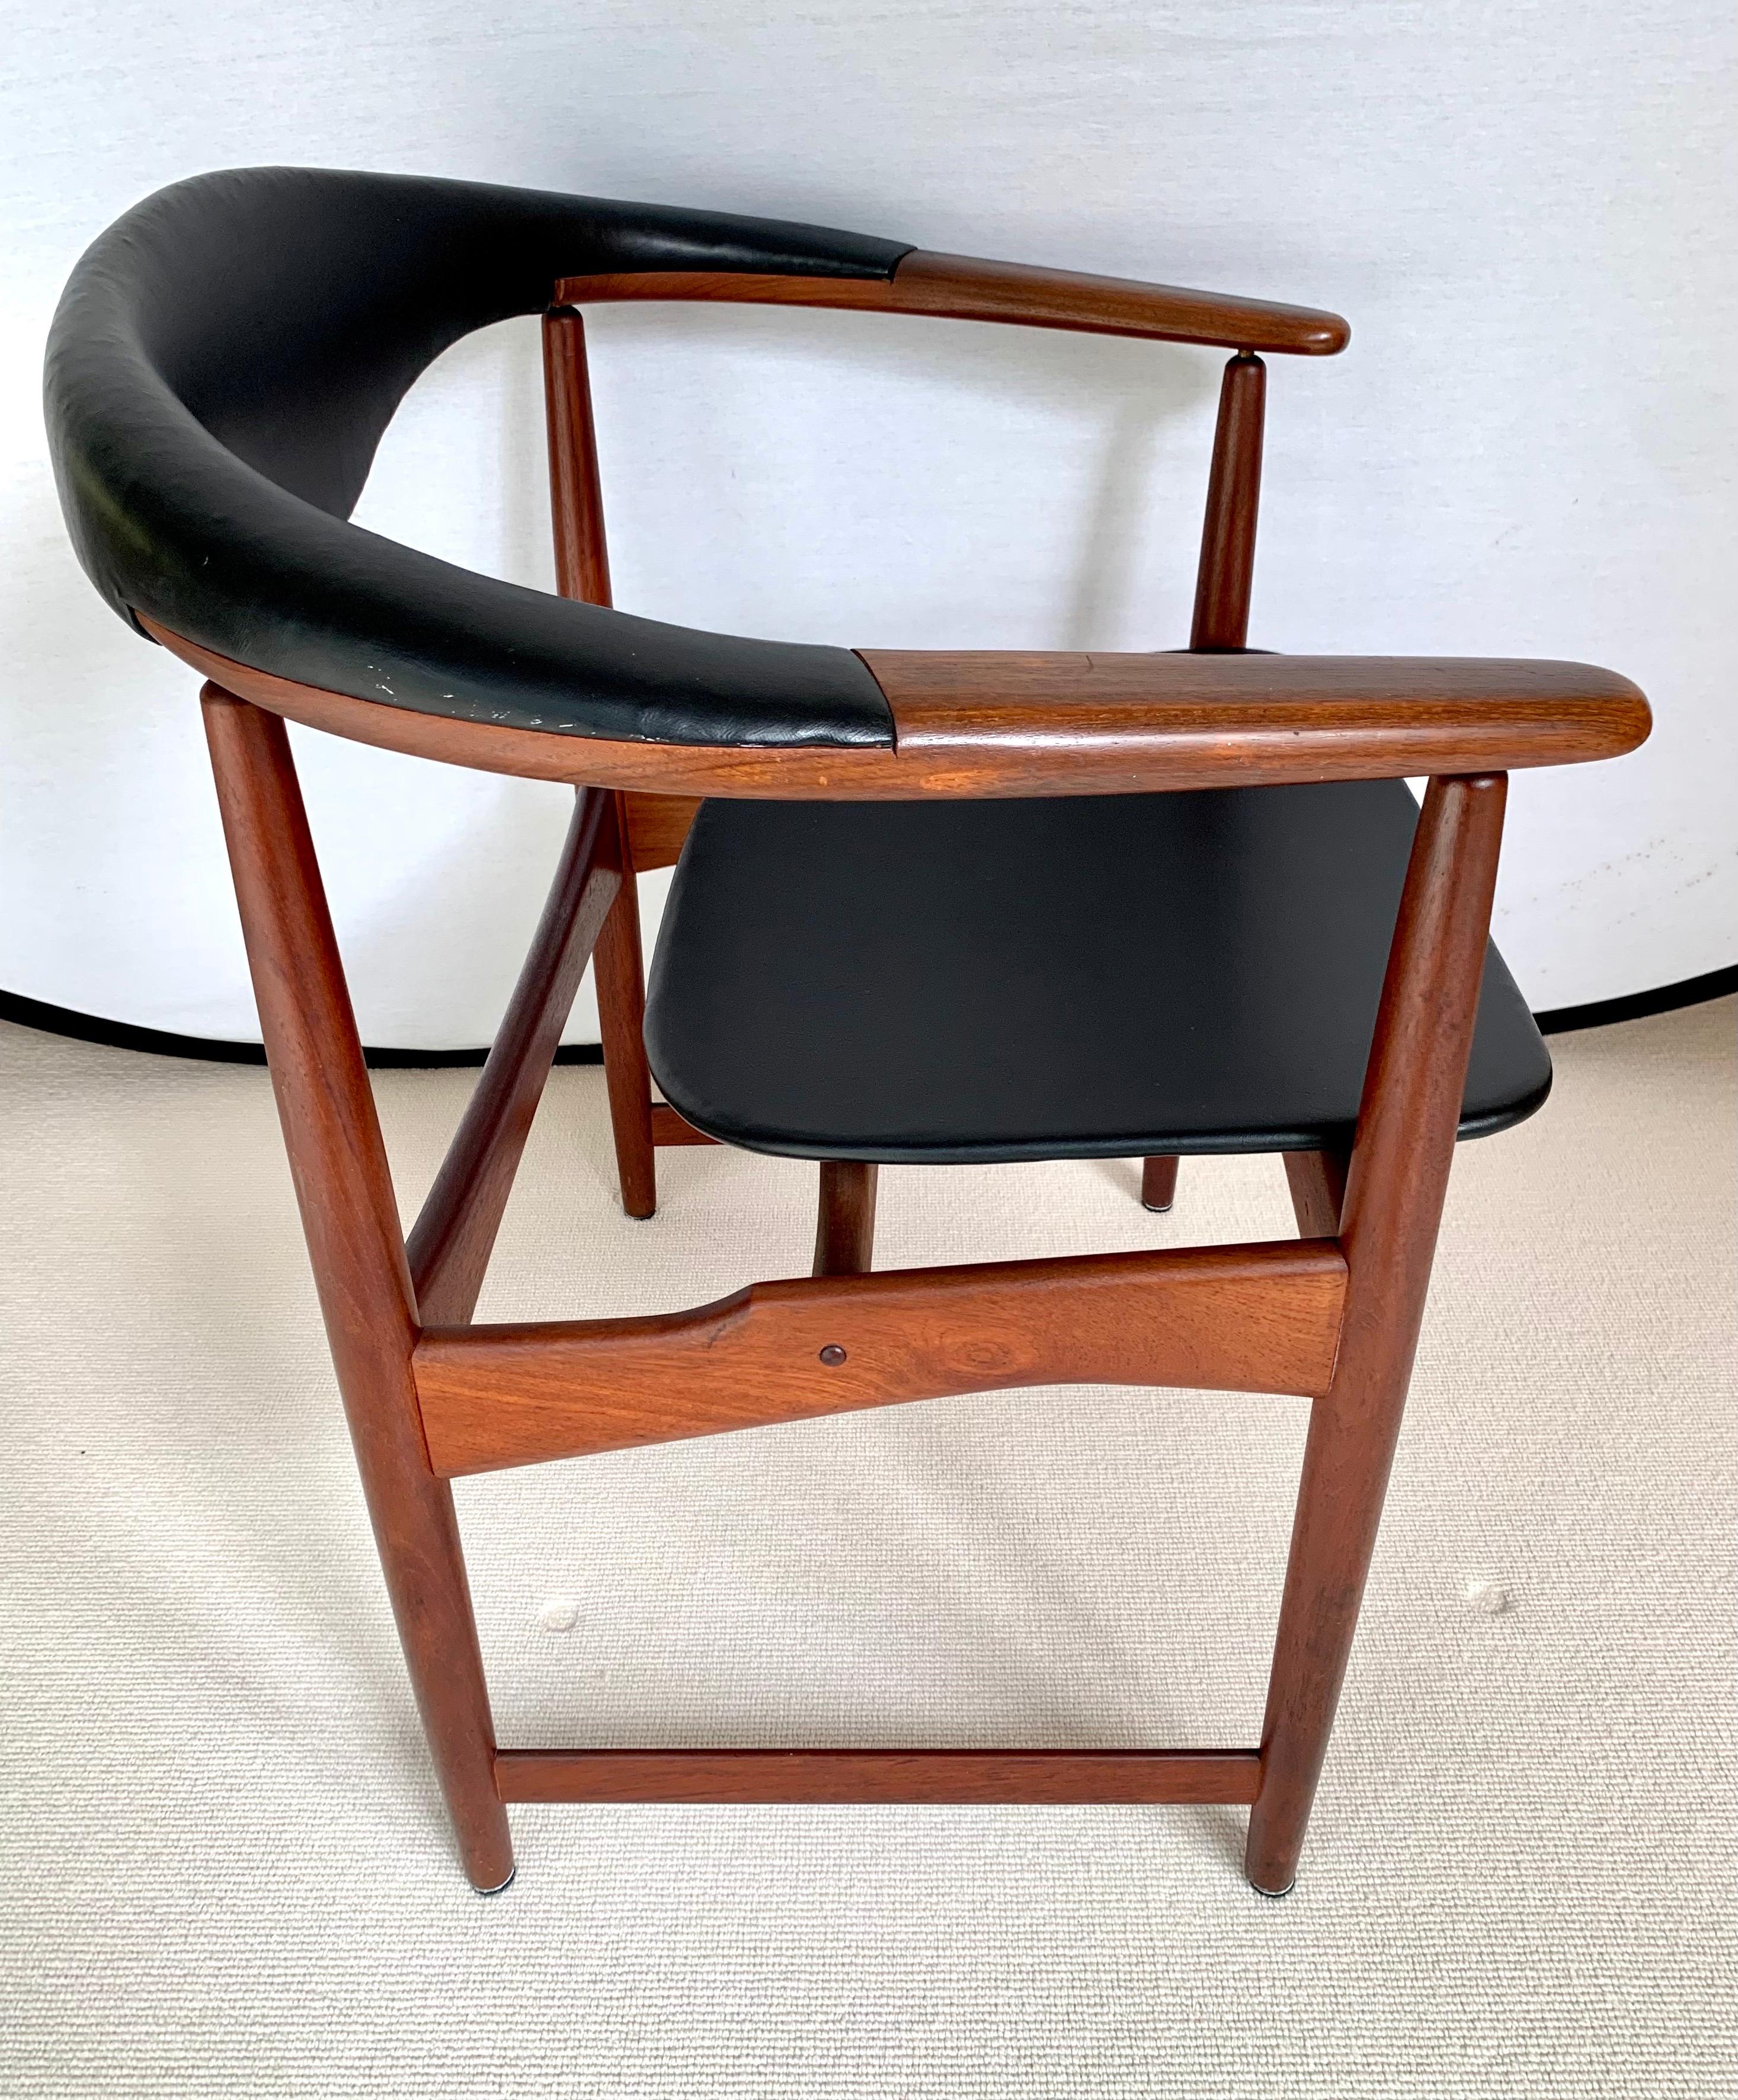 Late 20th Century Danish Modern Arne Hovmand-Olsen Walnut Chair